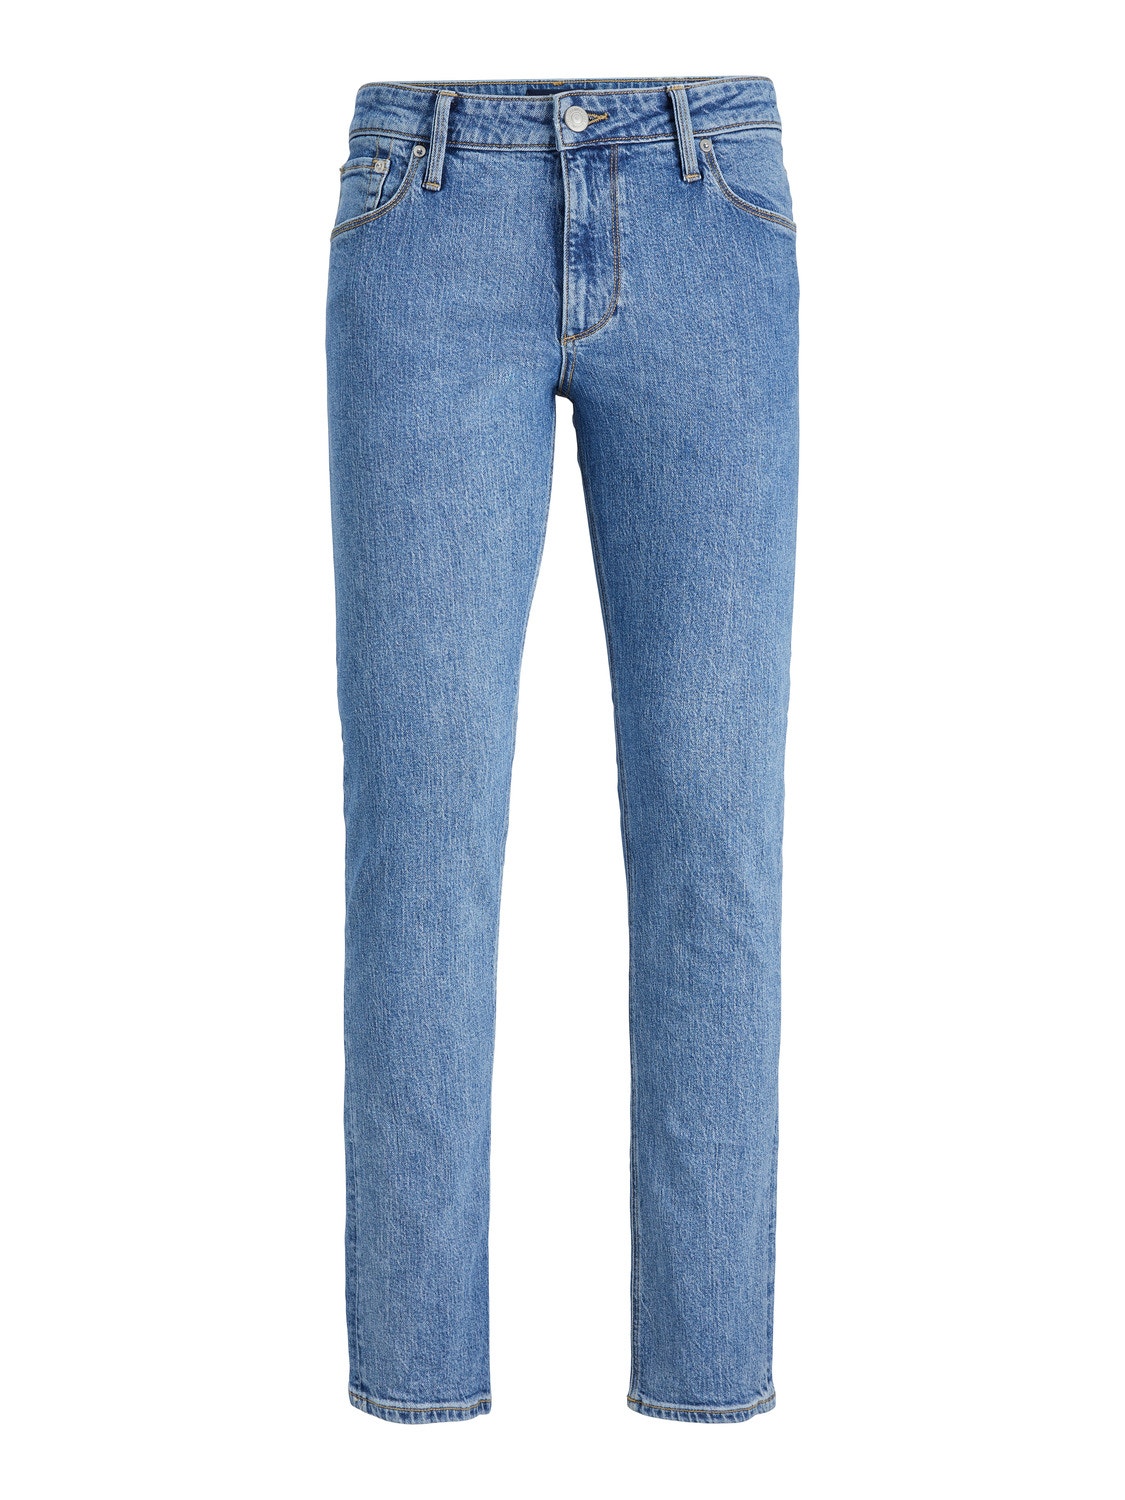 JJICLARK JJEVAN AM 395 NOOS Regular fit jeans